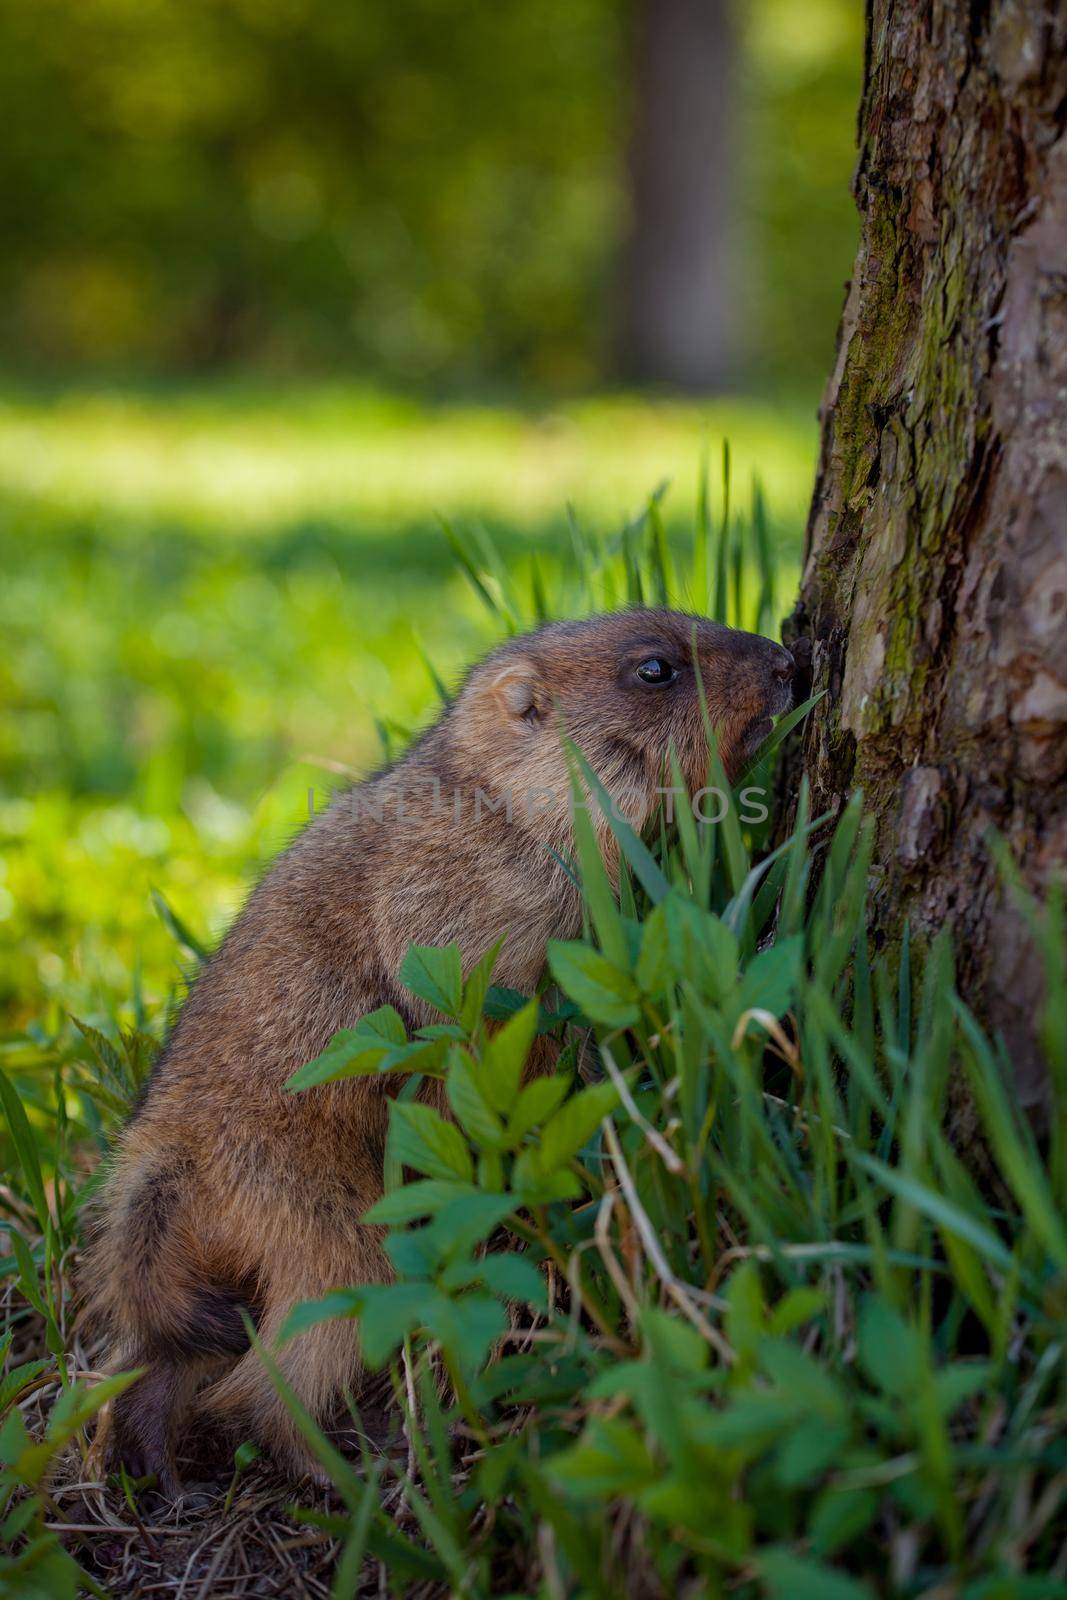 The bobak marmot cub on grass by RosaJay